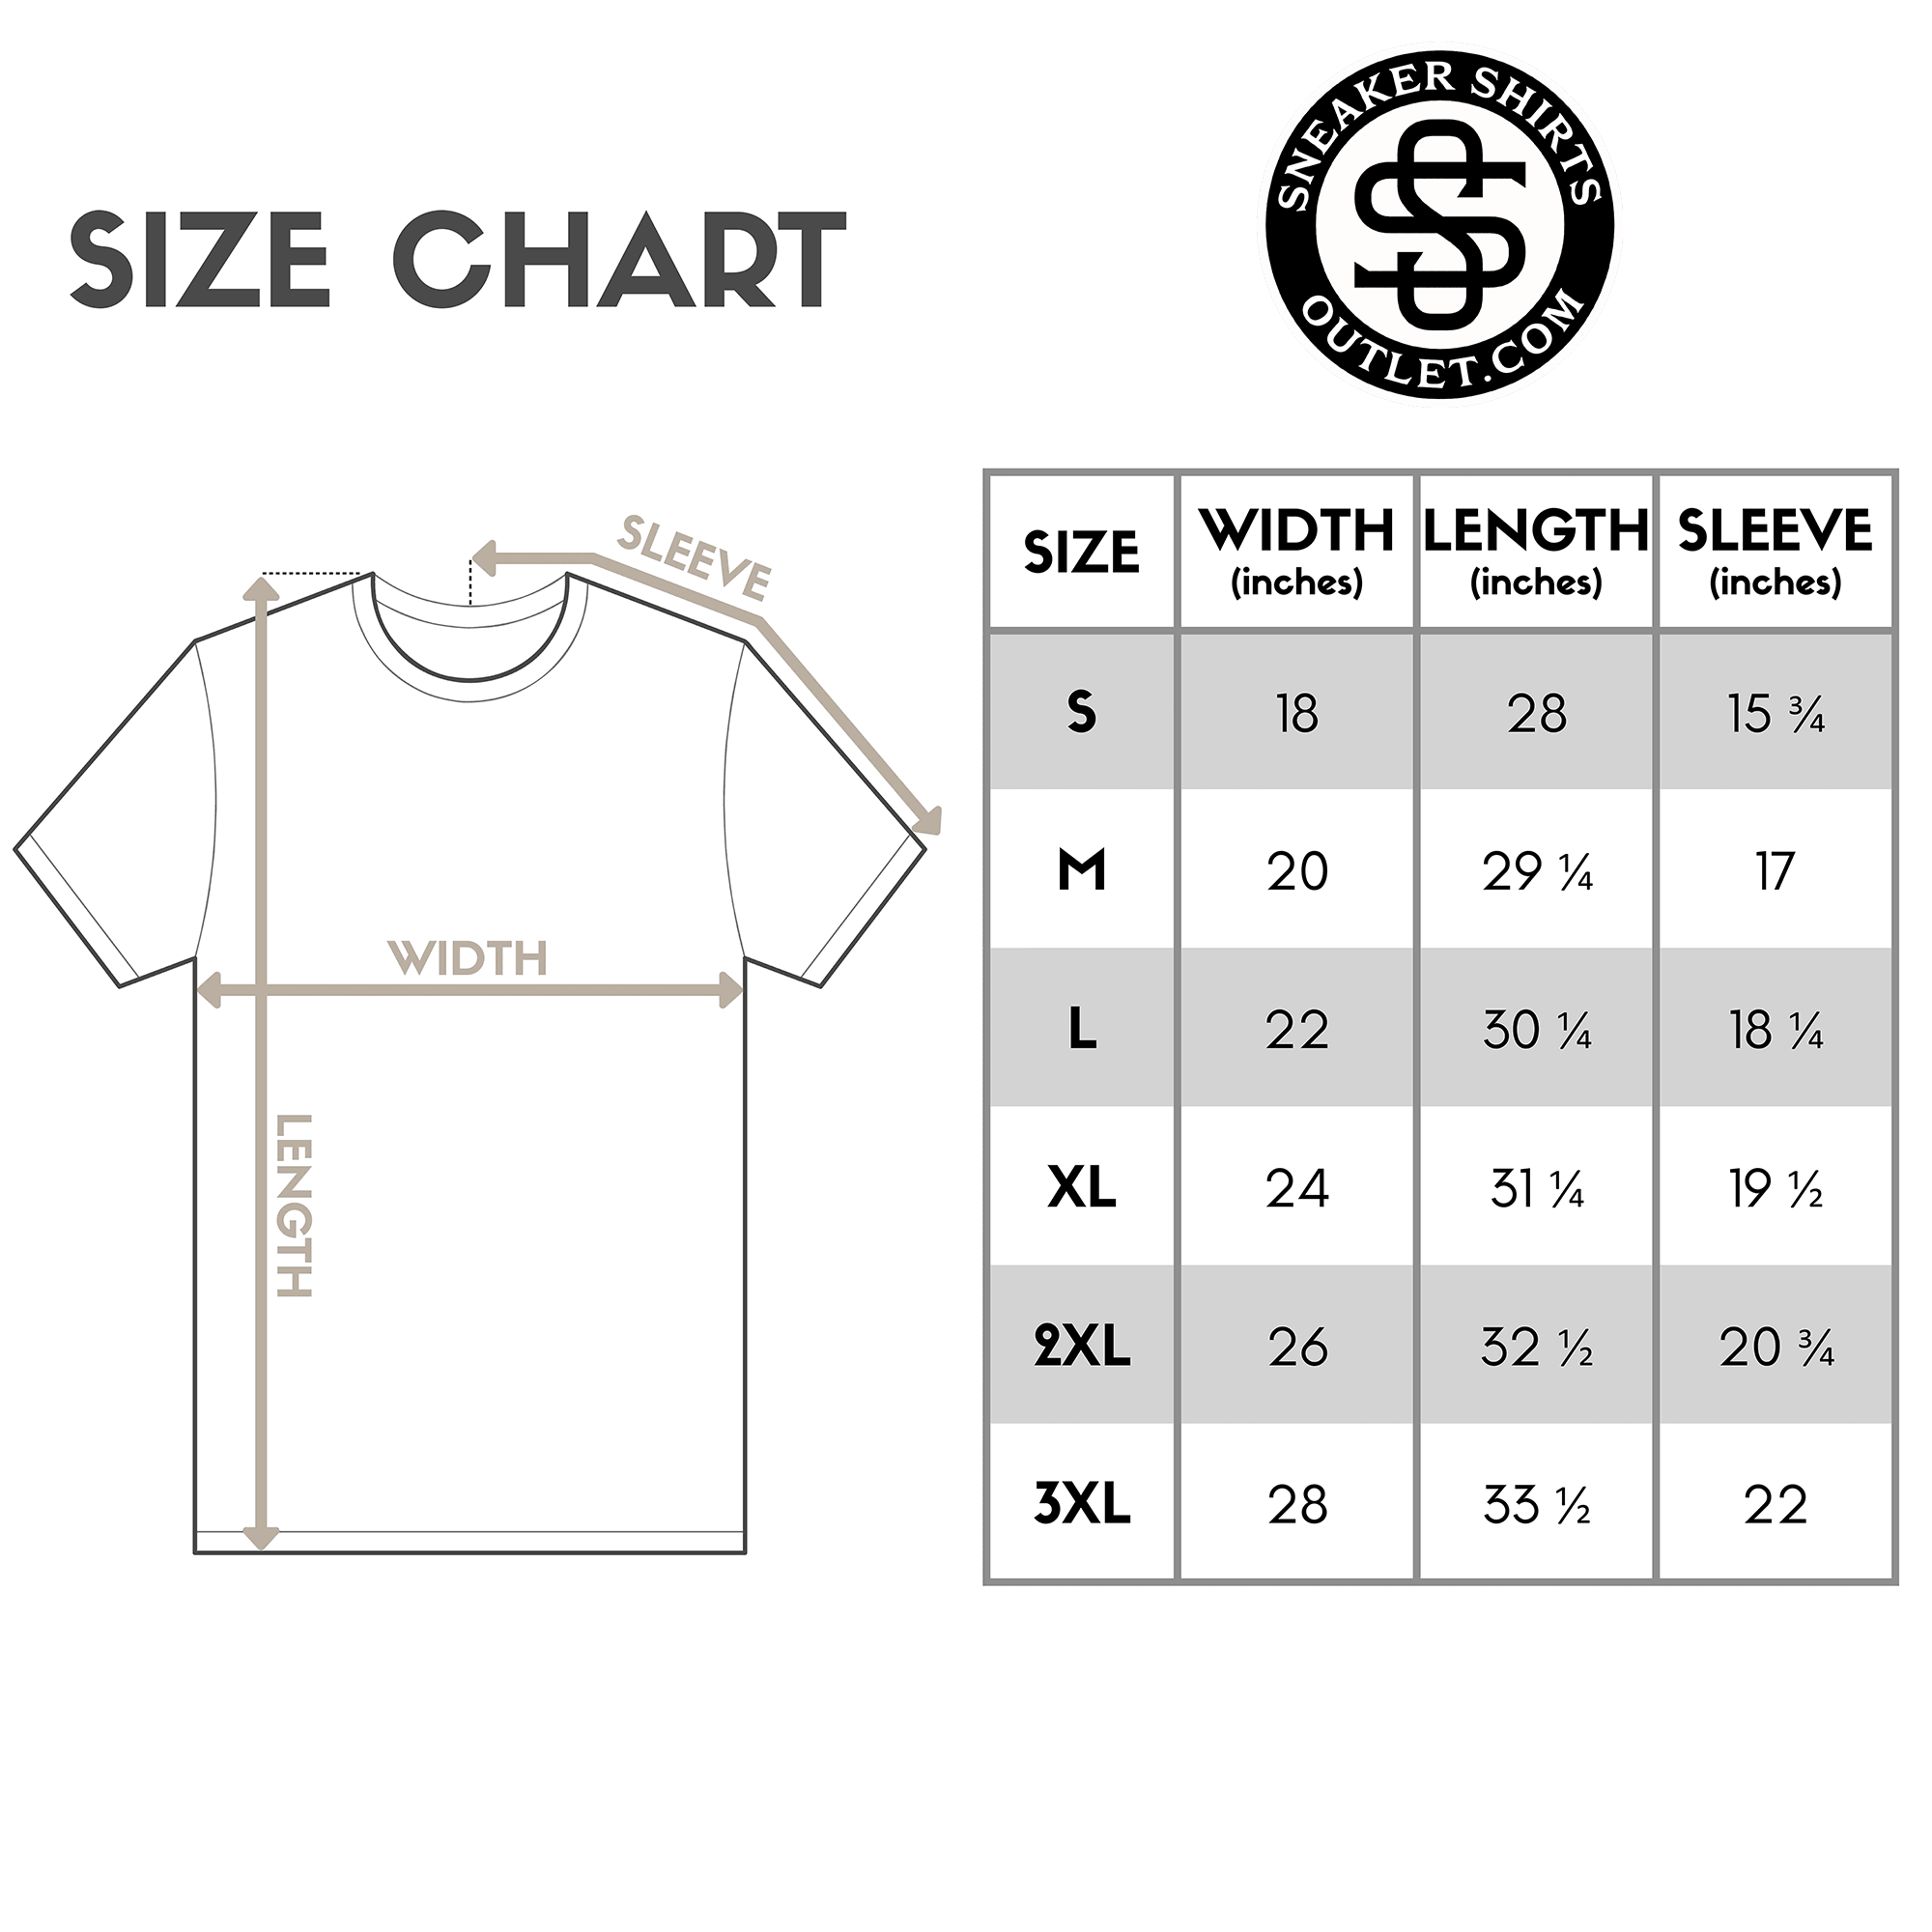 size chart 23 Melting Shirt Air Jordan 12 Twist photo